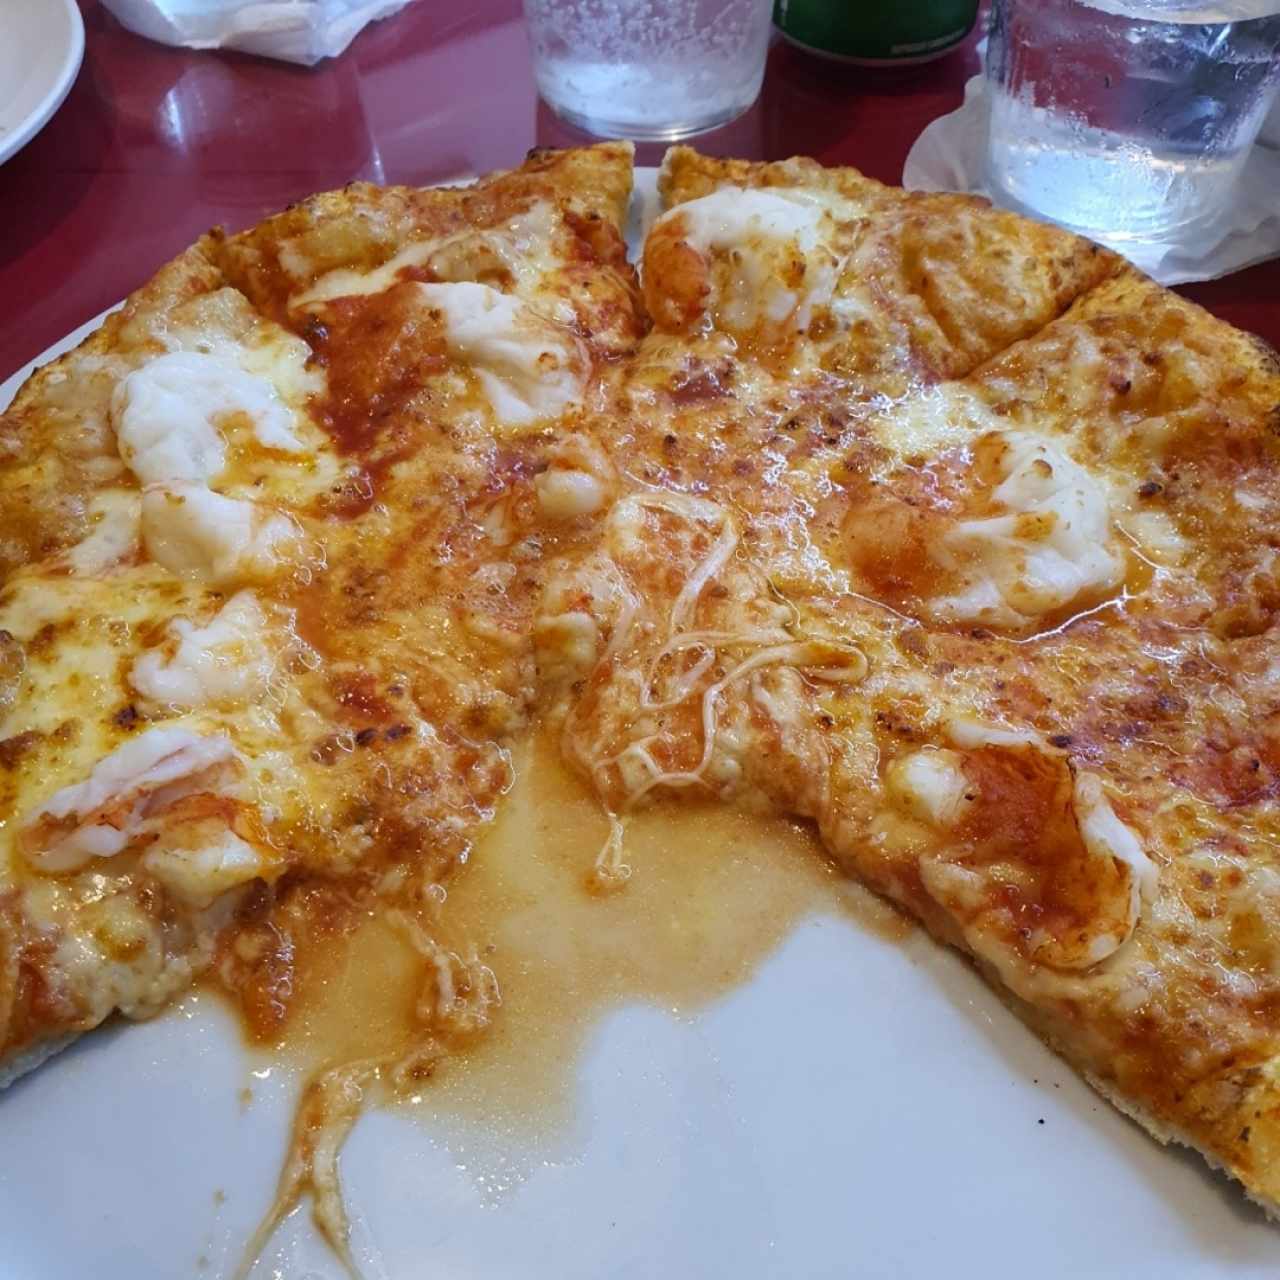 pizza de langostinos